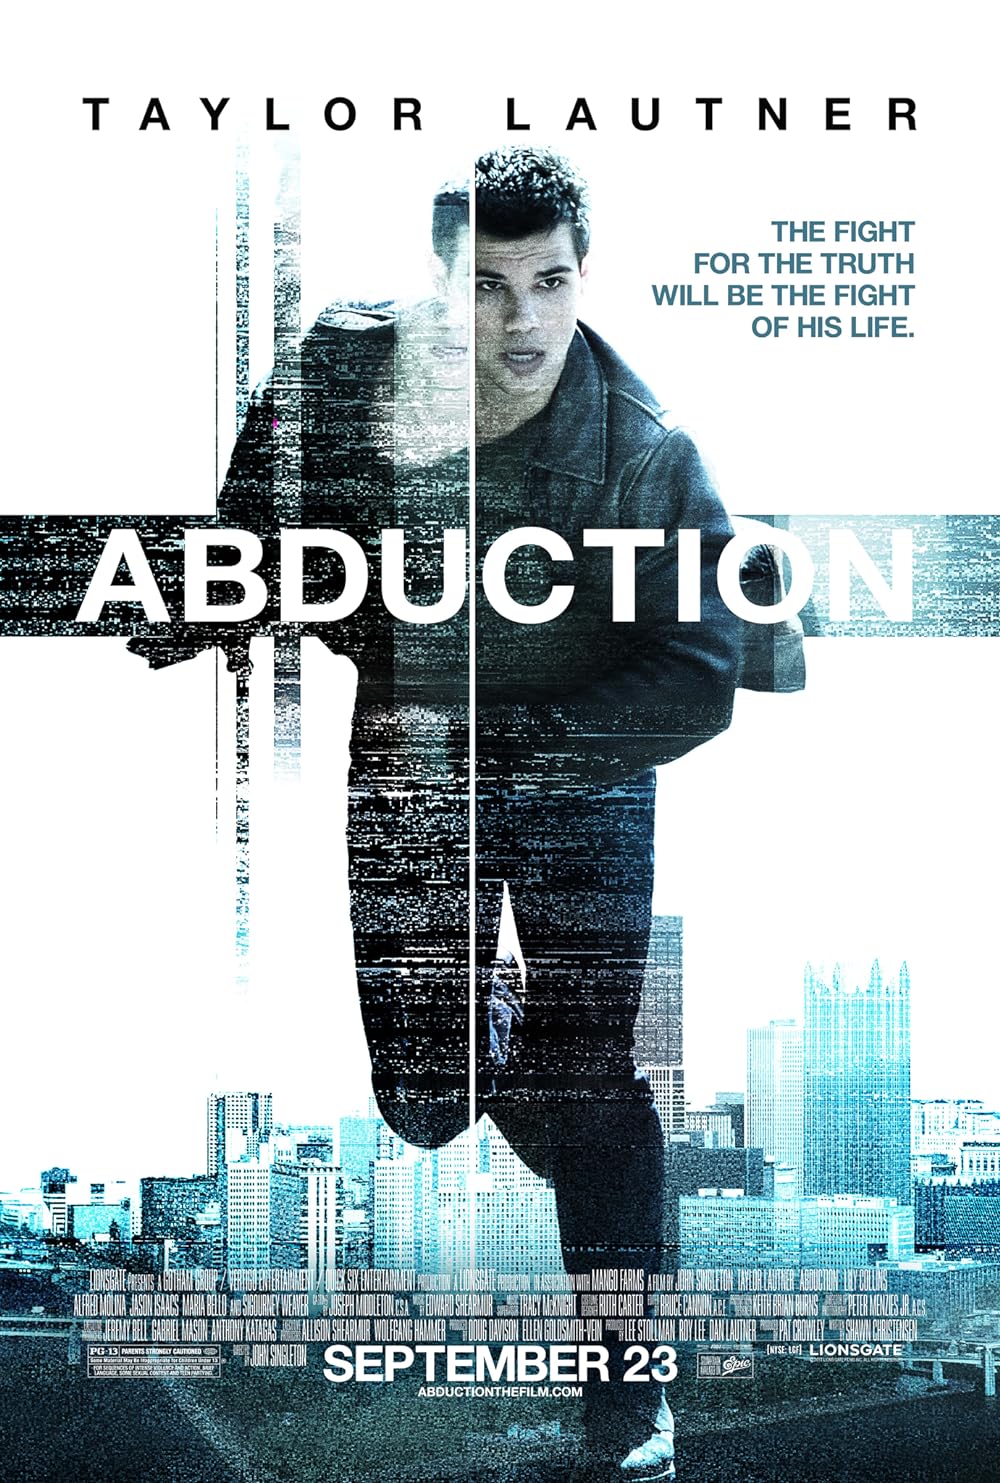 abduction 2011 online free